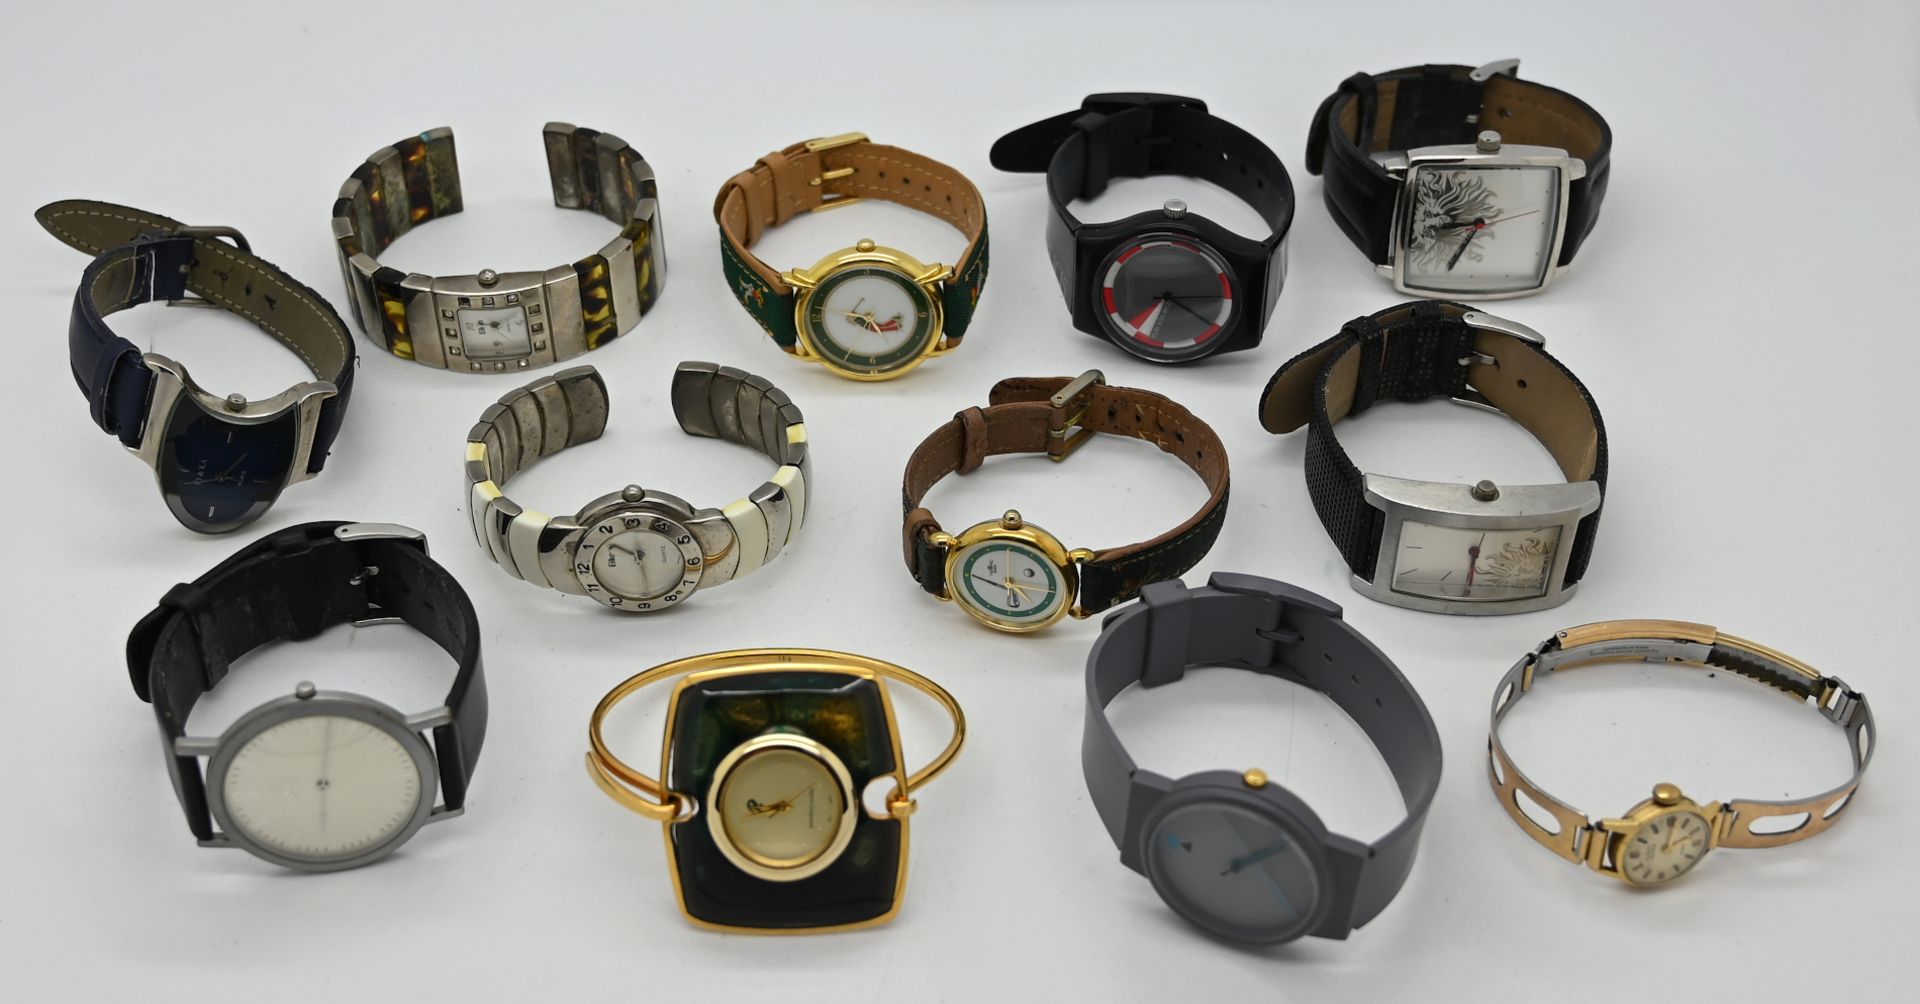 1 Uhrengehäuse ANKER GG 14ct., sowie verschiedene Armbanduhren: Metall, Kunststoff, Leder u.a. jew.